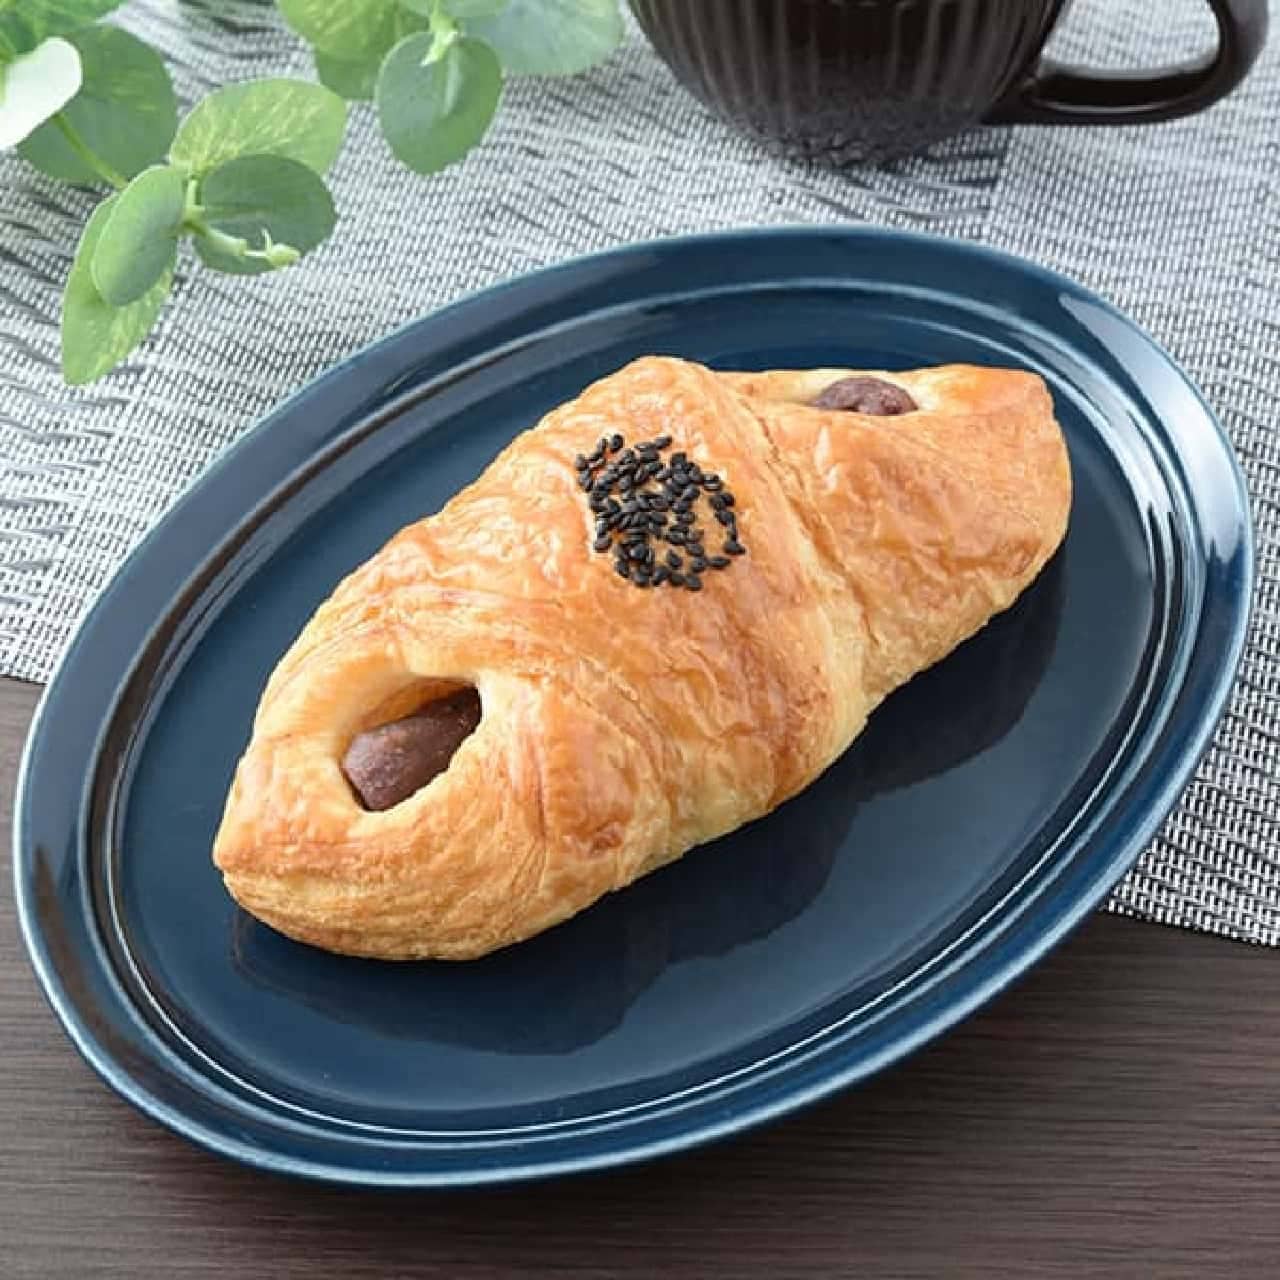 FamilyMart "An Croissant (Koshian)